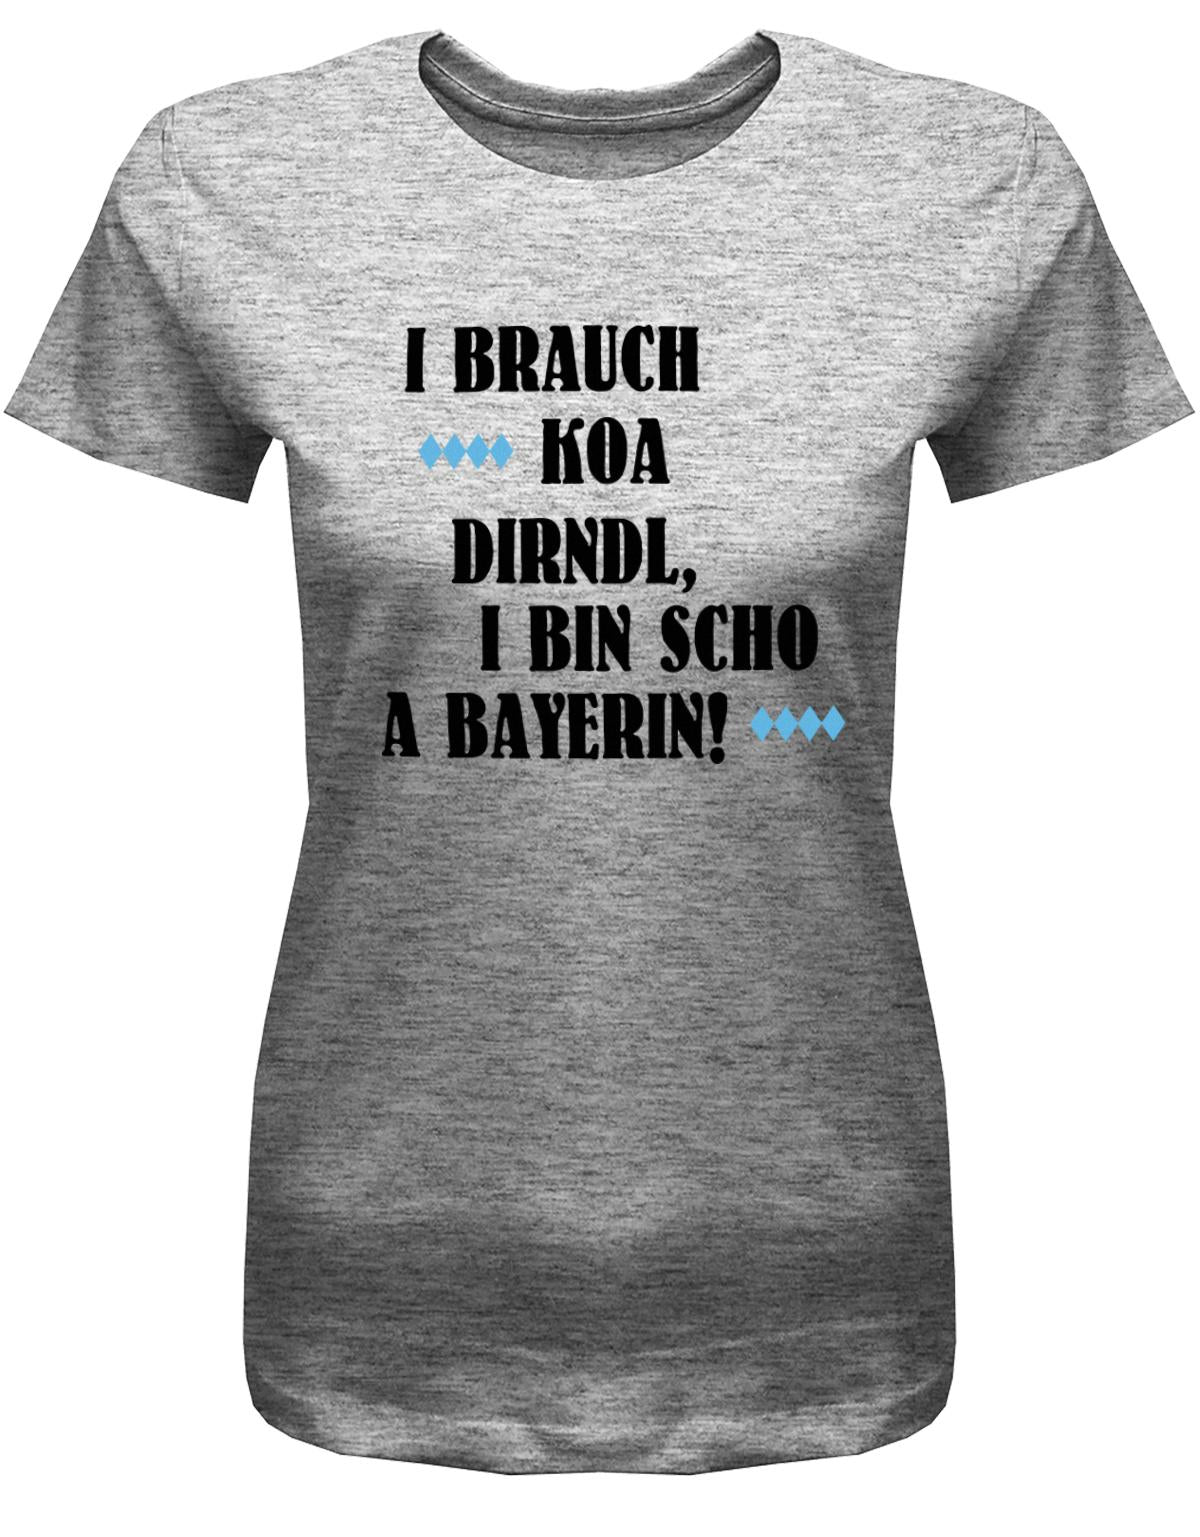 i-brauch-koa-dirndl-i-bin-scho-a-bayerin-damen-shirt-grau